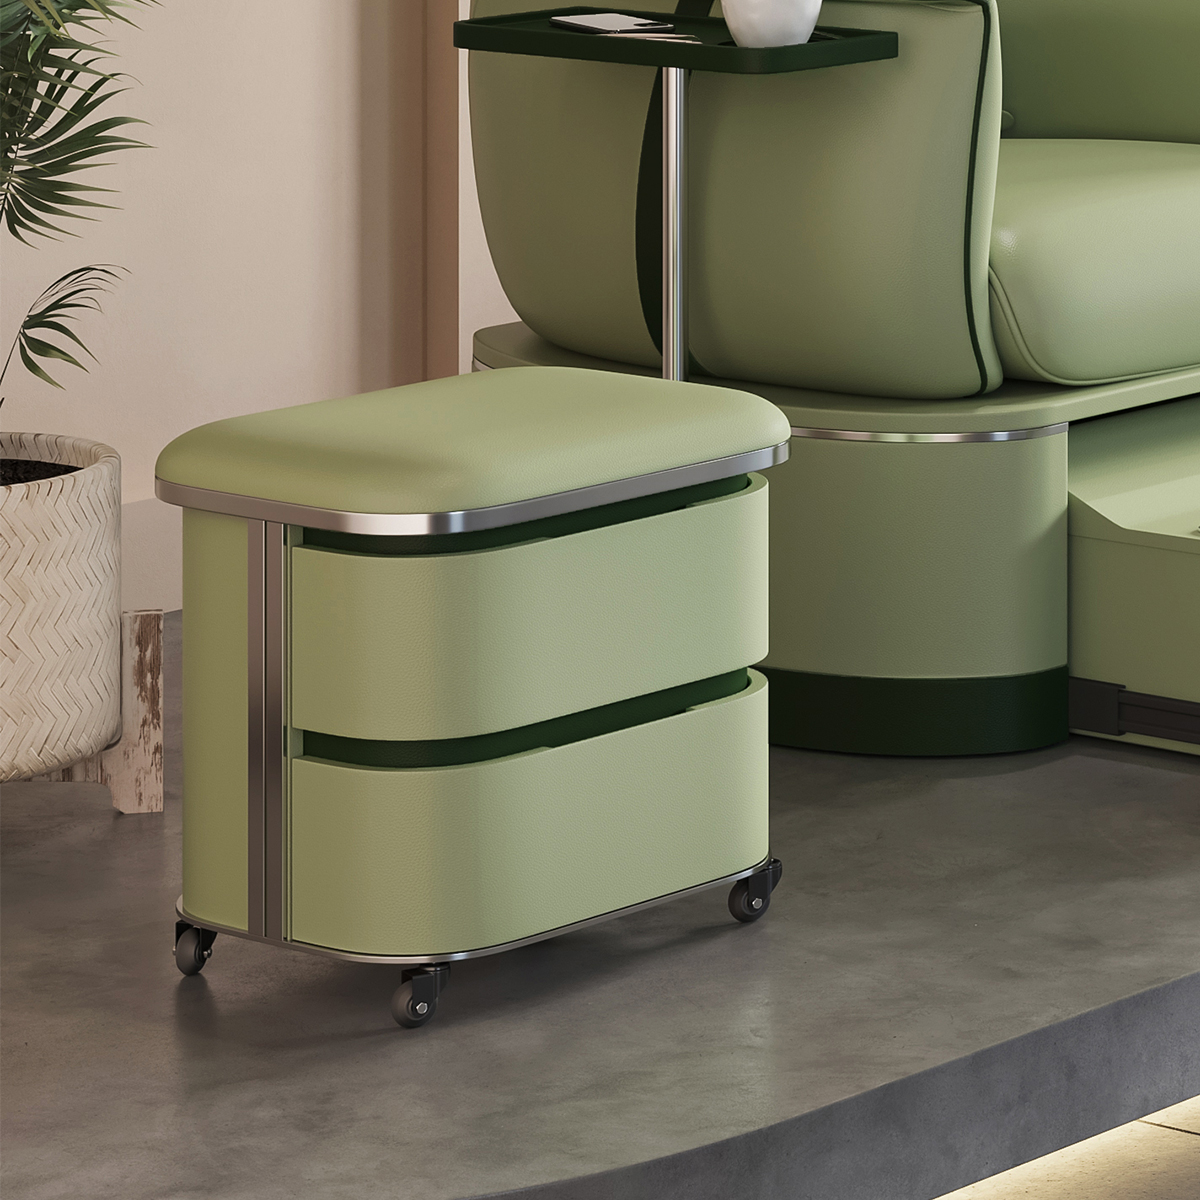 Glorall green pedi station for pedicure spa chair (3)